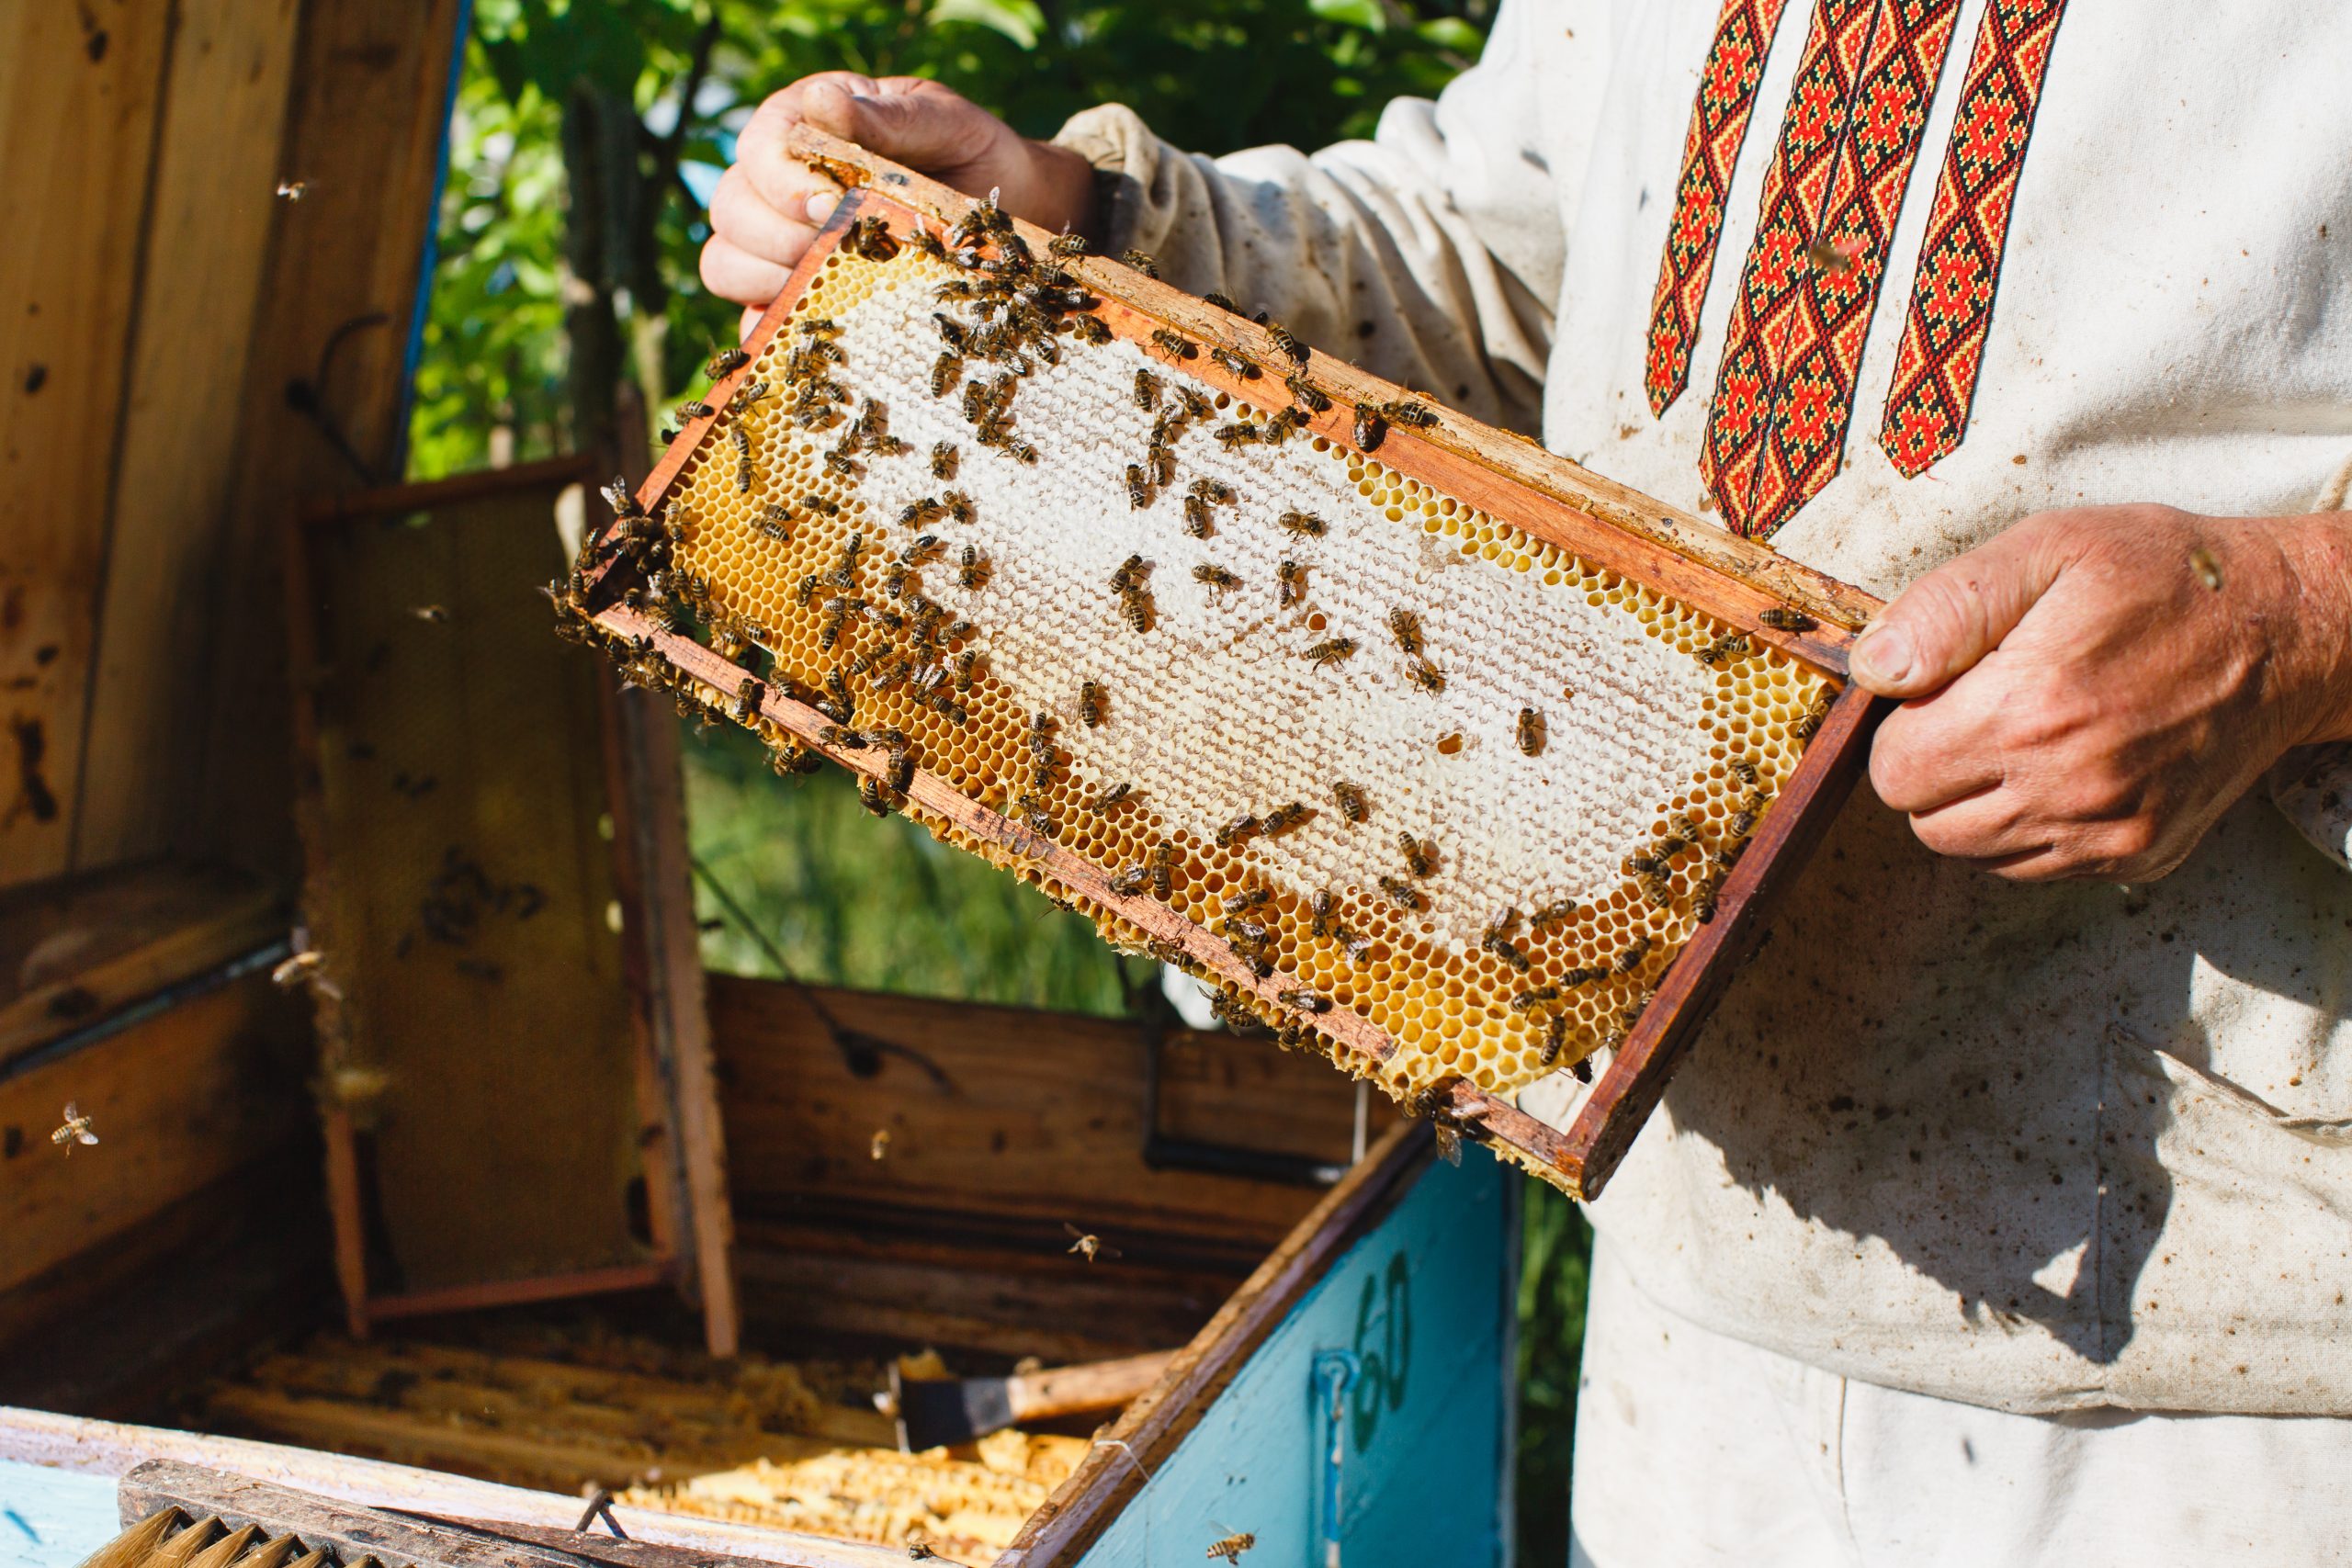 Florida Beekeeper Reveals Top Threats to Local Honey Bees